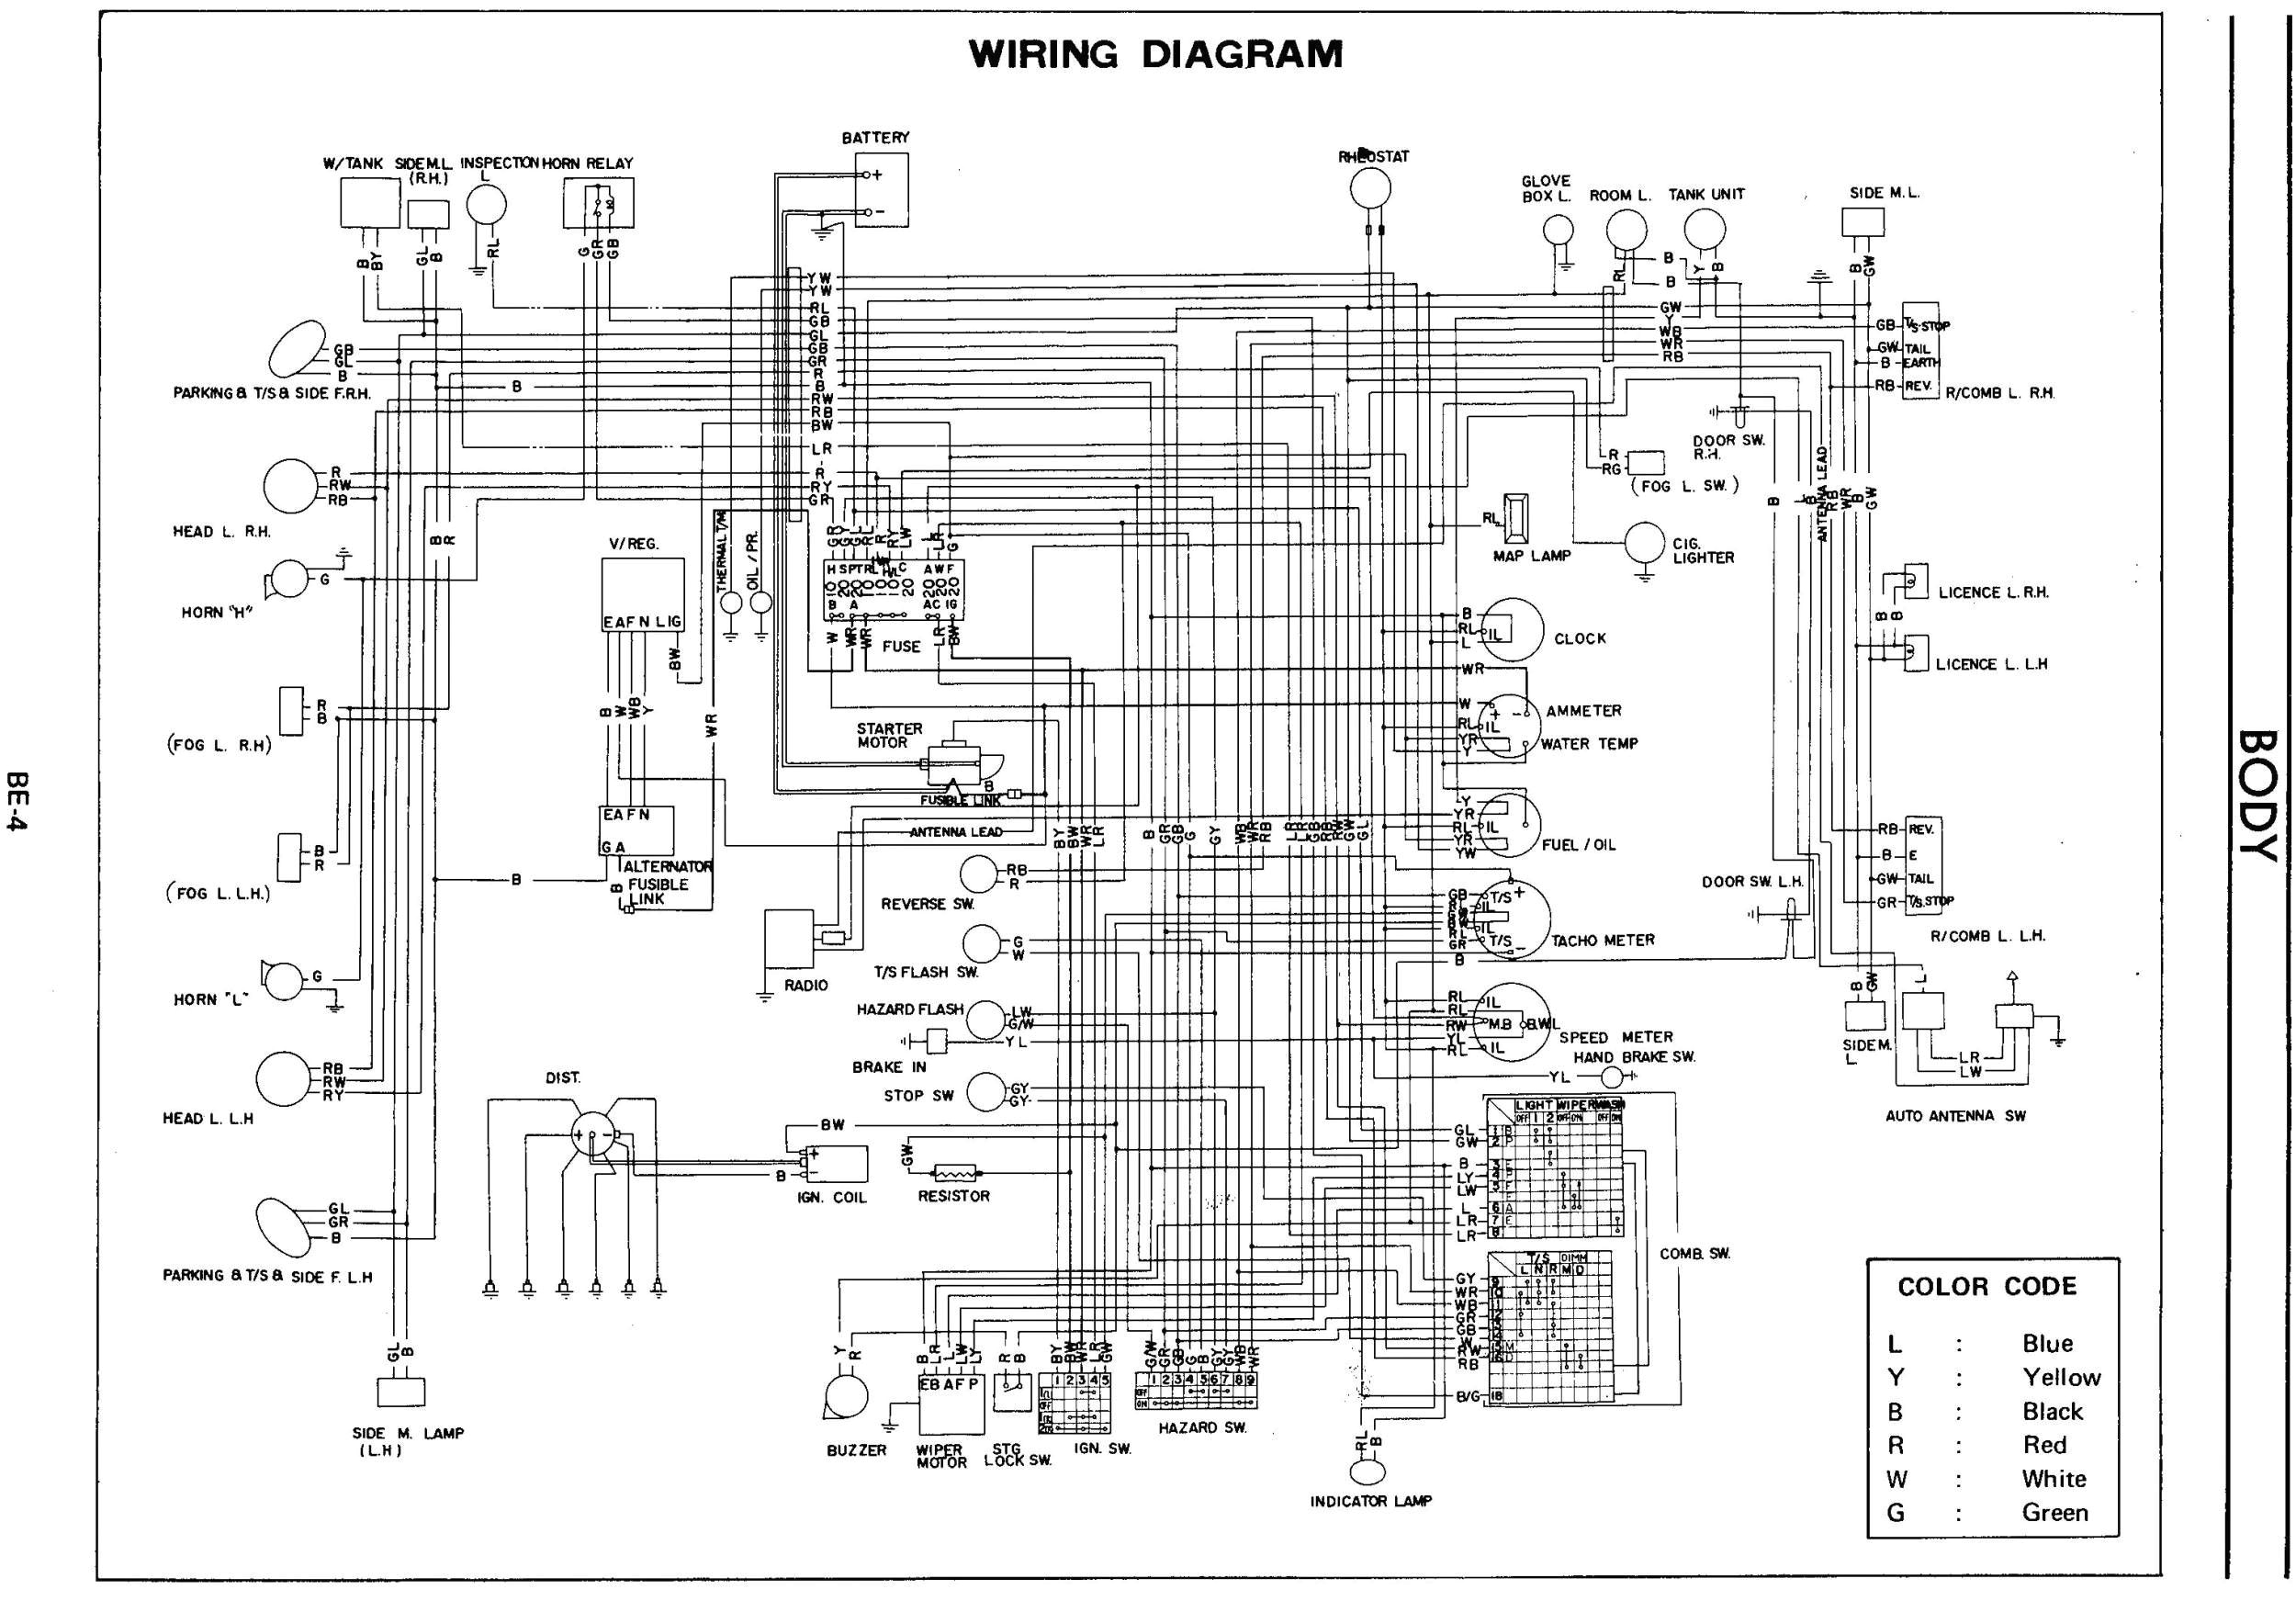 mercedes benz 300e engine diagram online manuual of wiring diagram 92 mercedes 2 3 engine diagram